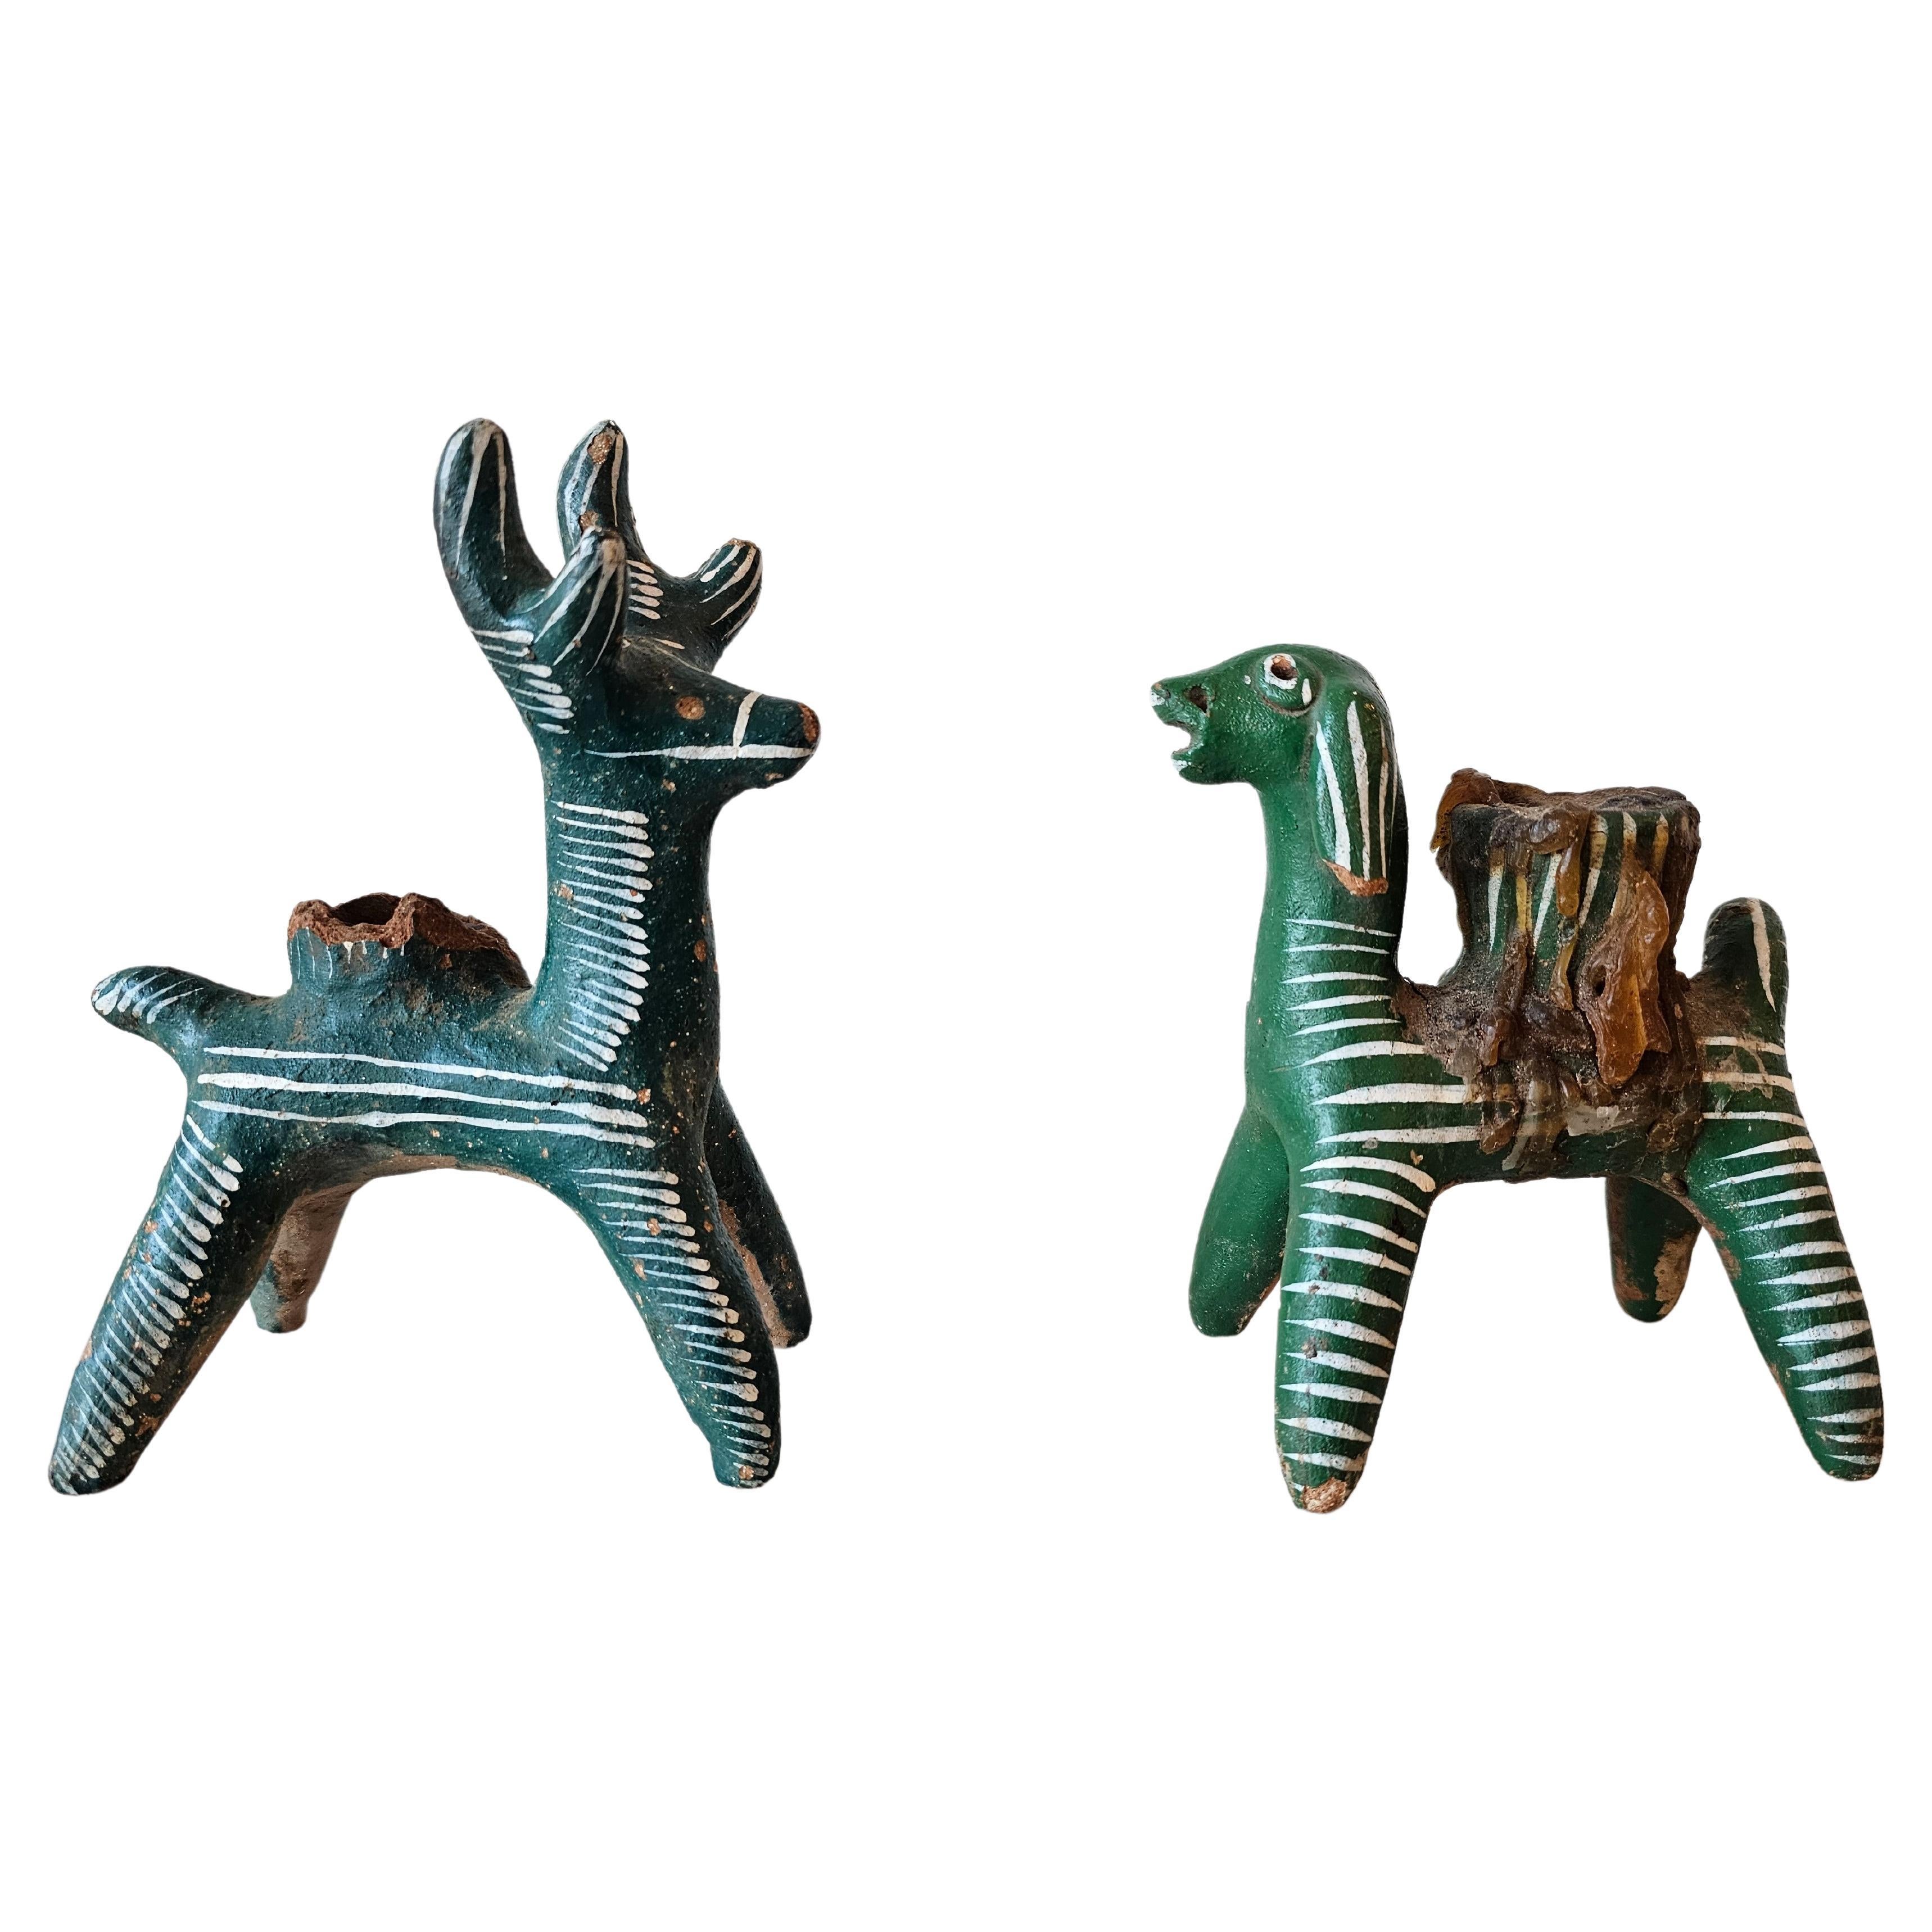 Vintage Nahua-Kerzenhalter mit Tieren aus mexikanischer Volkskunst, Chililico Hidalgo, Nahua-Keramik im Angebot